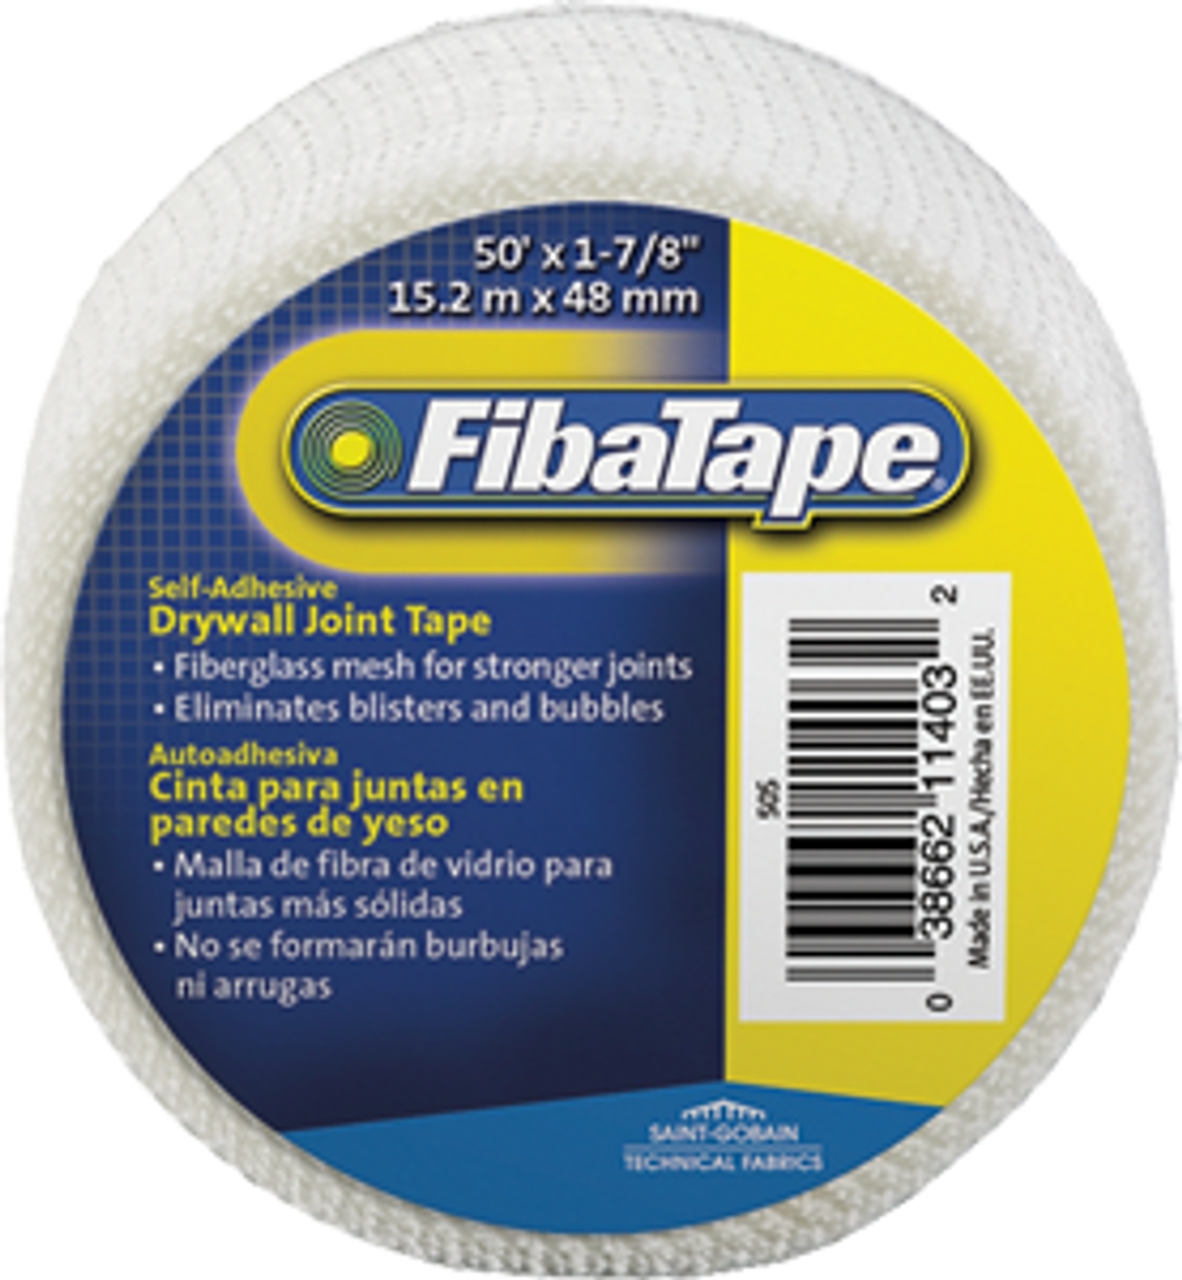 Fibatape FDW8658-U 1-7/8 x 50' White Self Adhesive Mesh Drywall